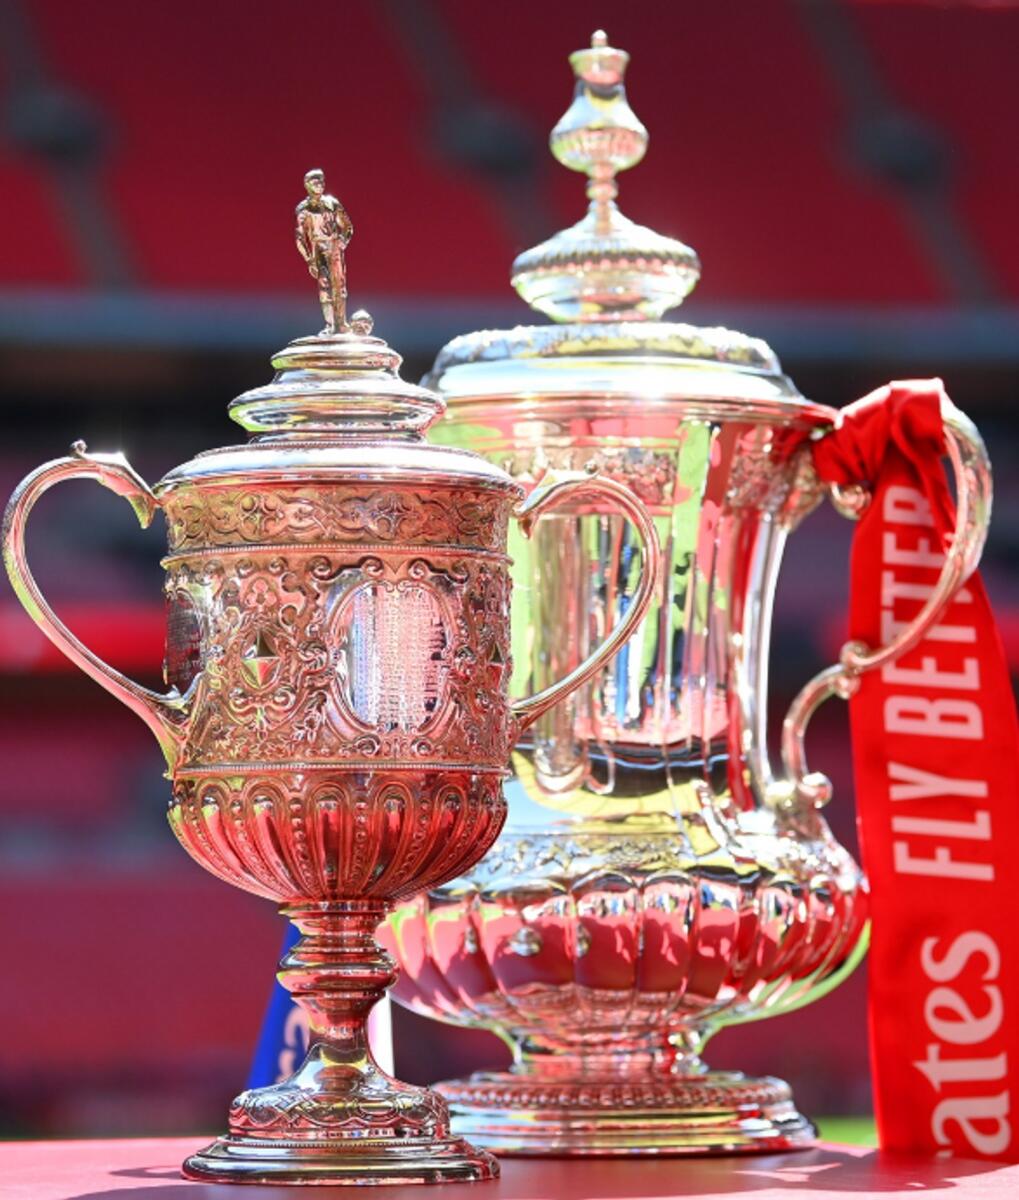 The original FA Cup trophy. - Instagram